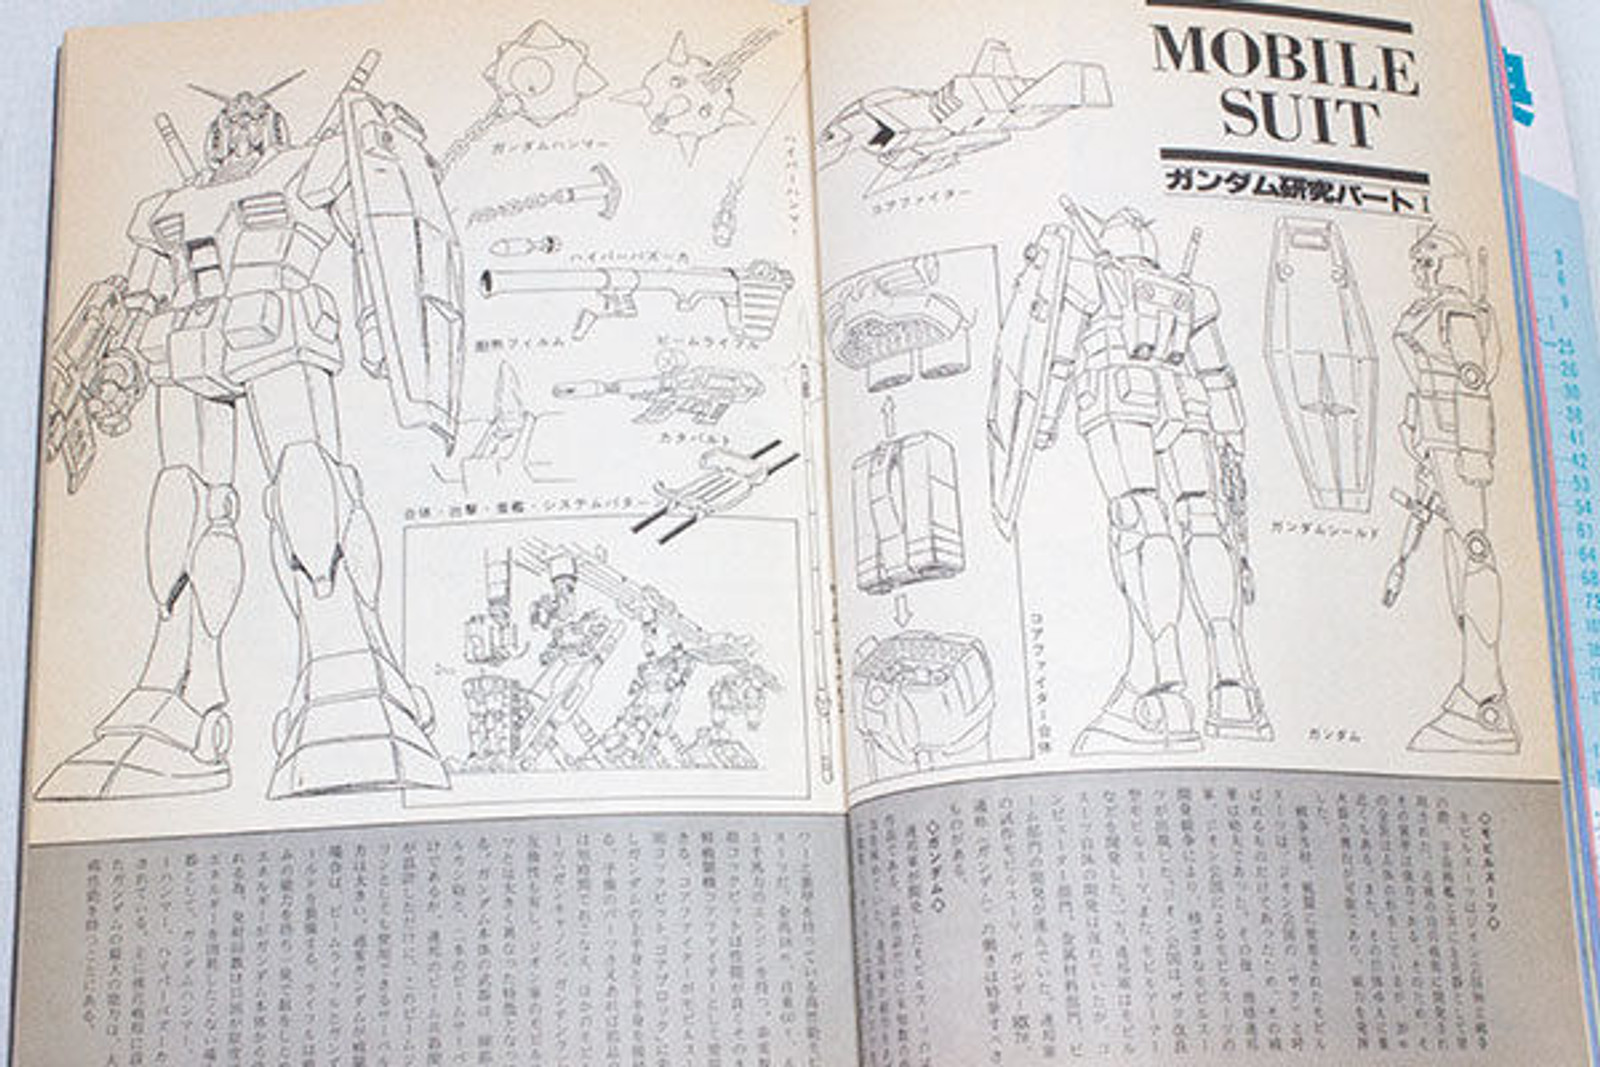 Gundam Encyclopedia Part 2 Rapport Deluxe Animec JAPAN ANIME MANGA ROBOT